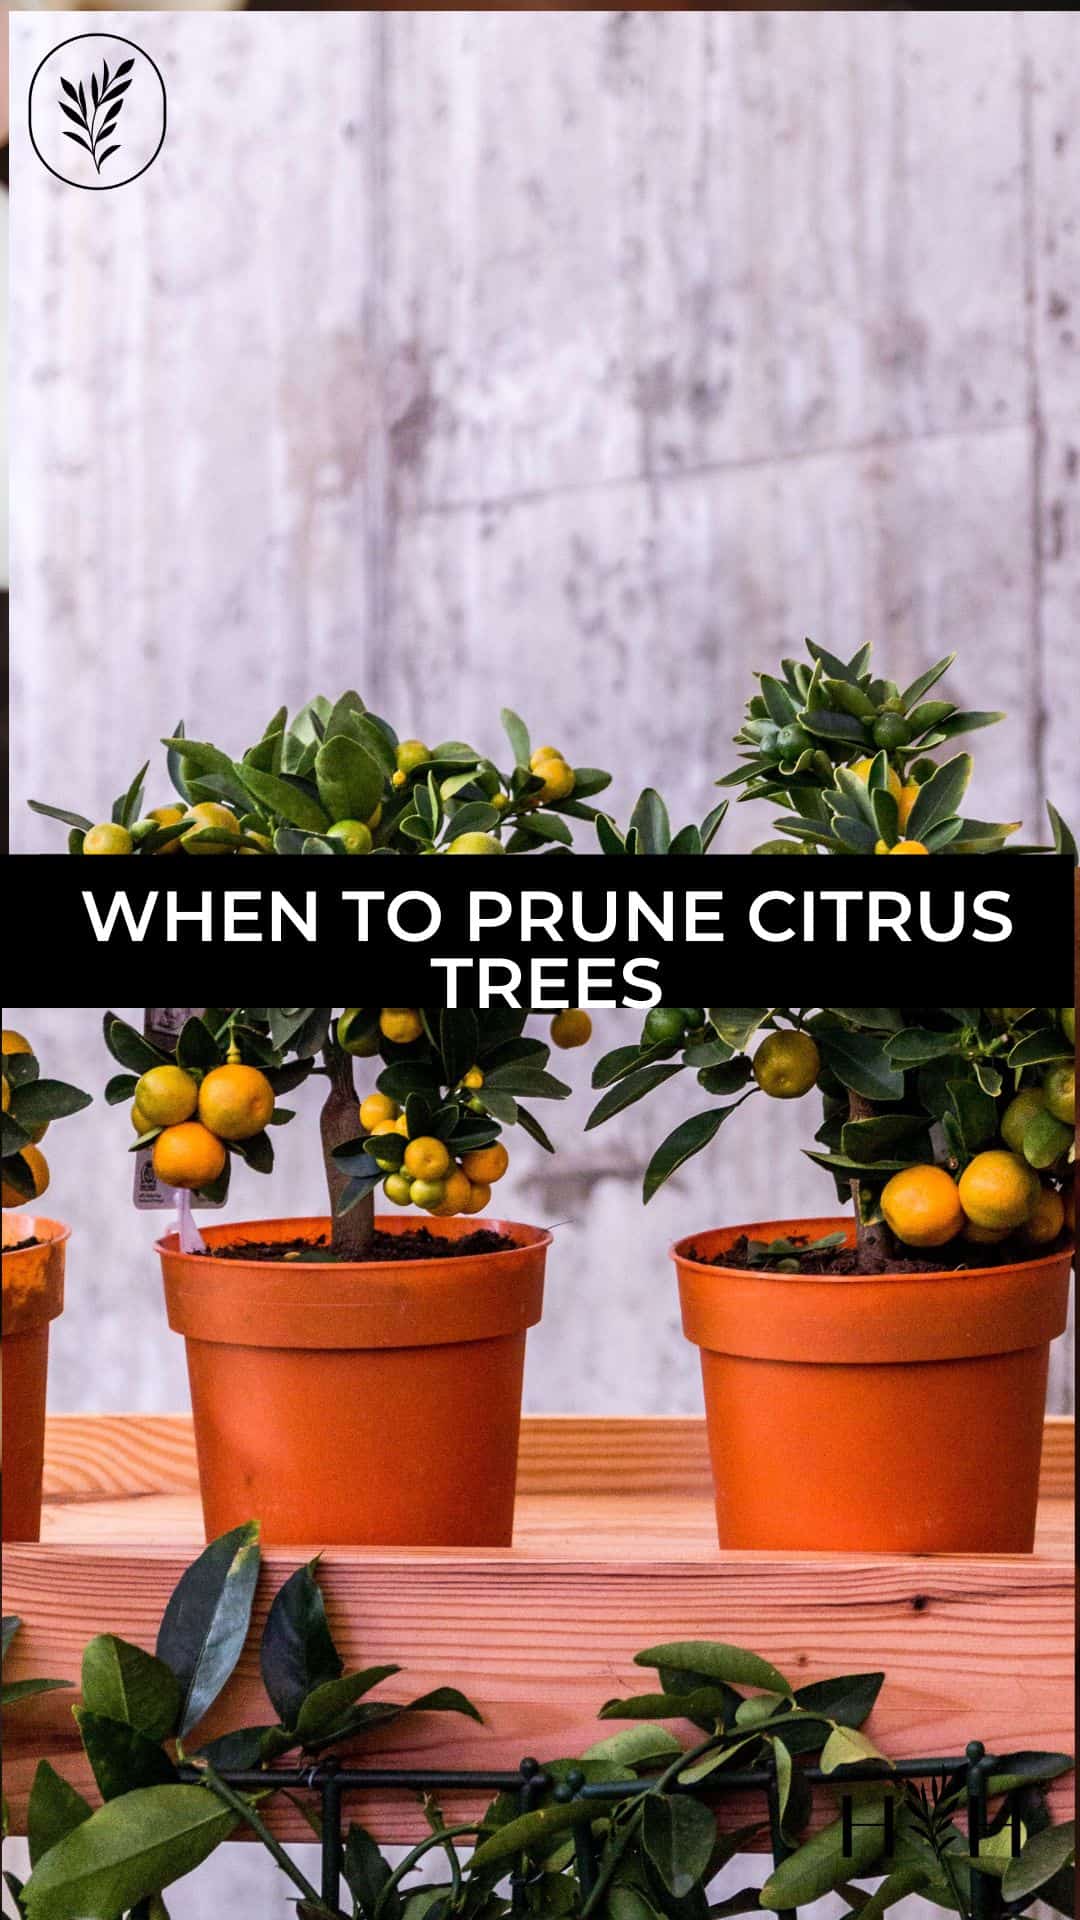 When to prune citrus trees via @home4theharvest